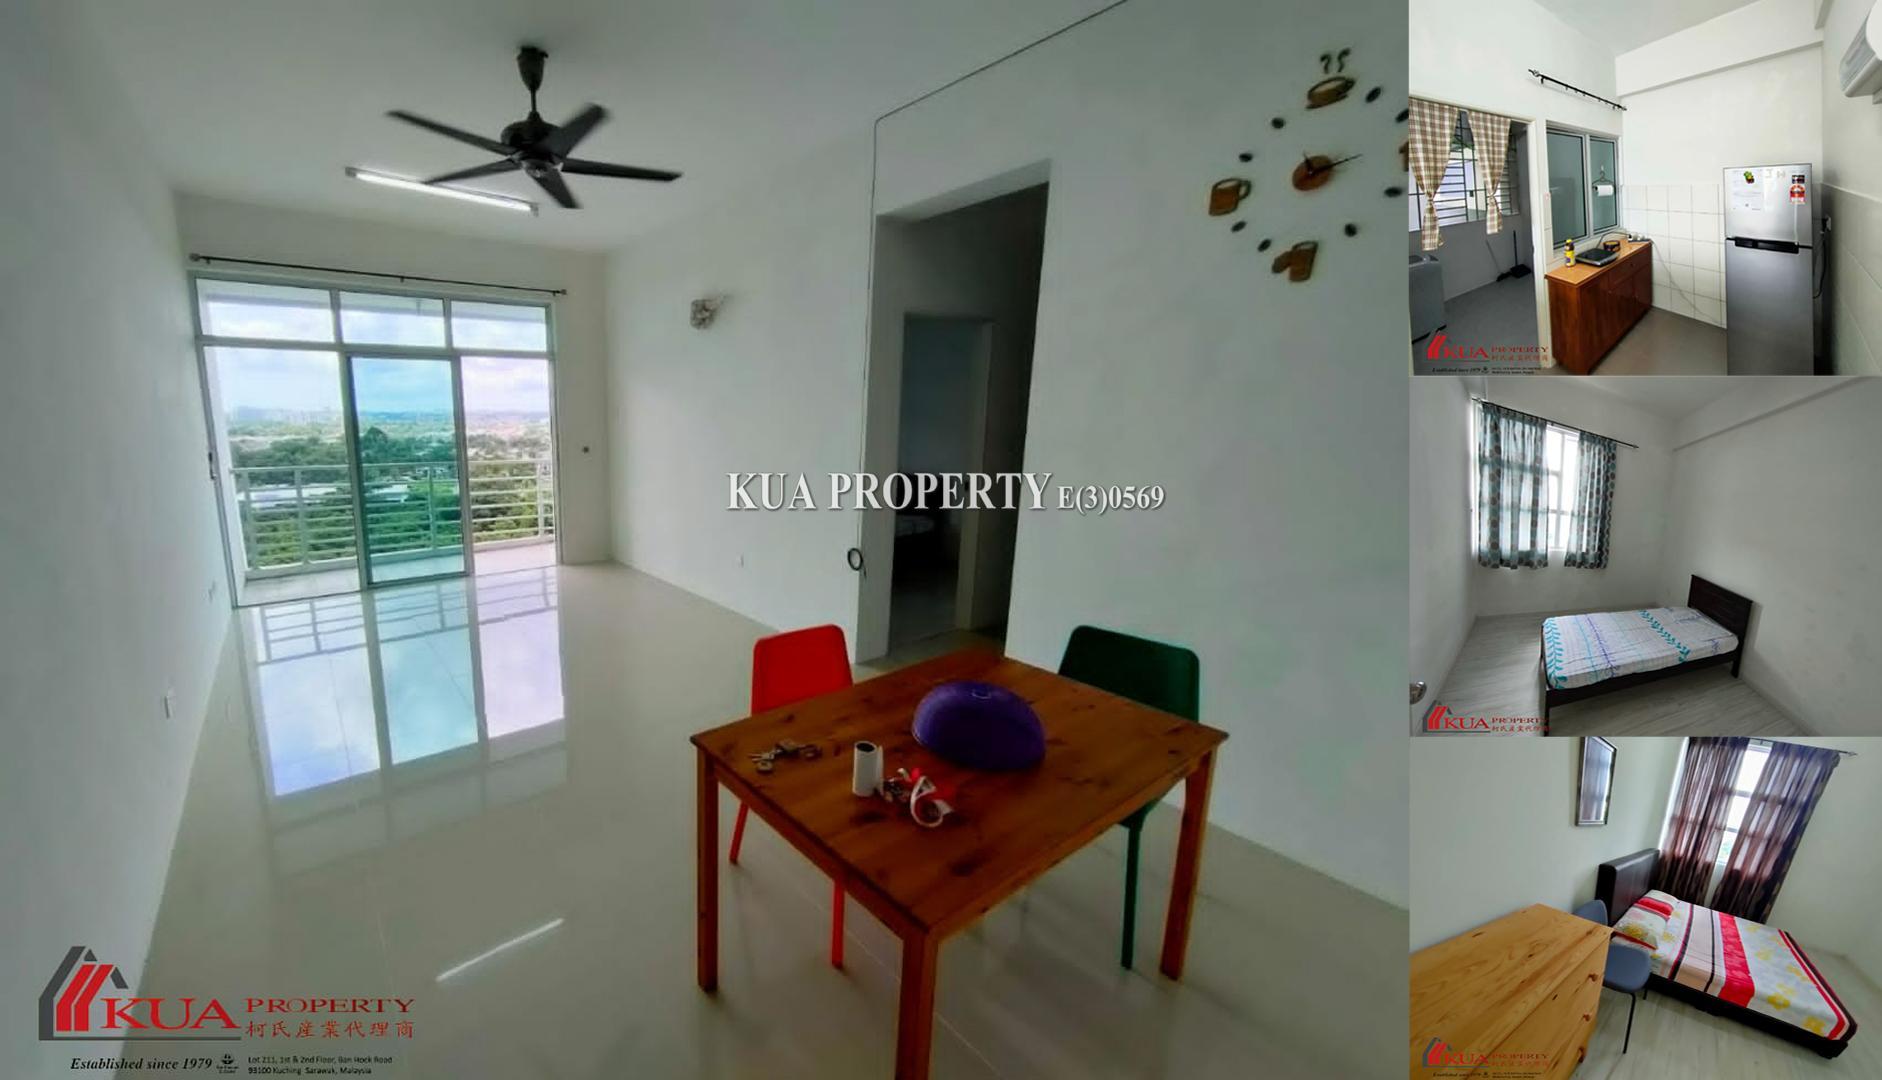 Skyvilla Condominium For Sale! Located at MJC, Batu Kawa, Kuching